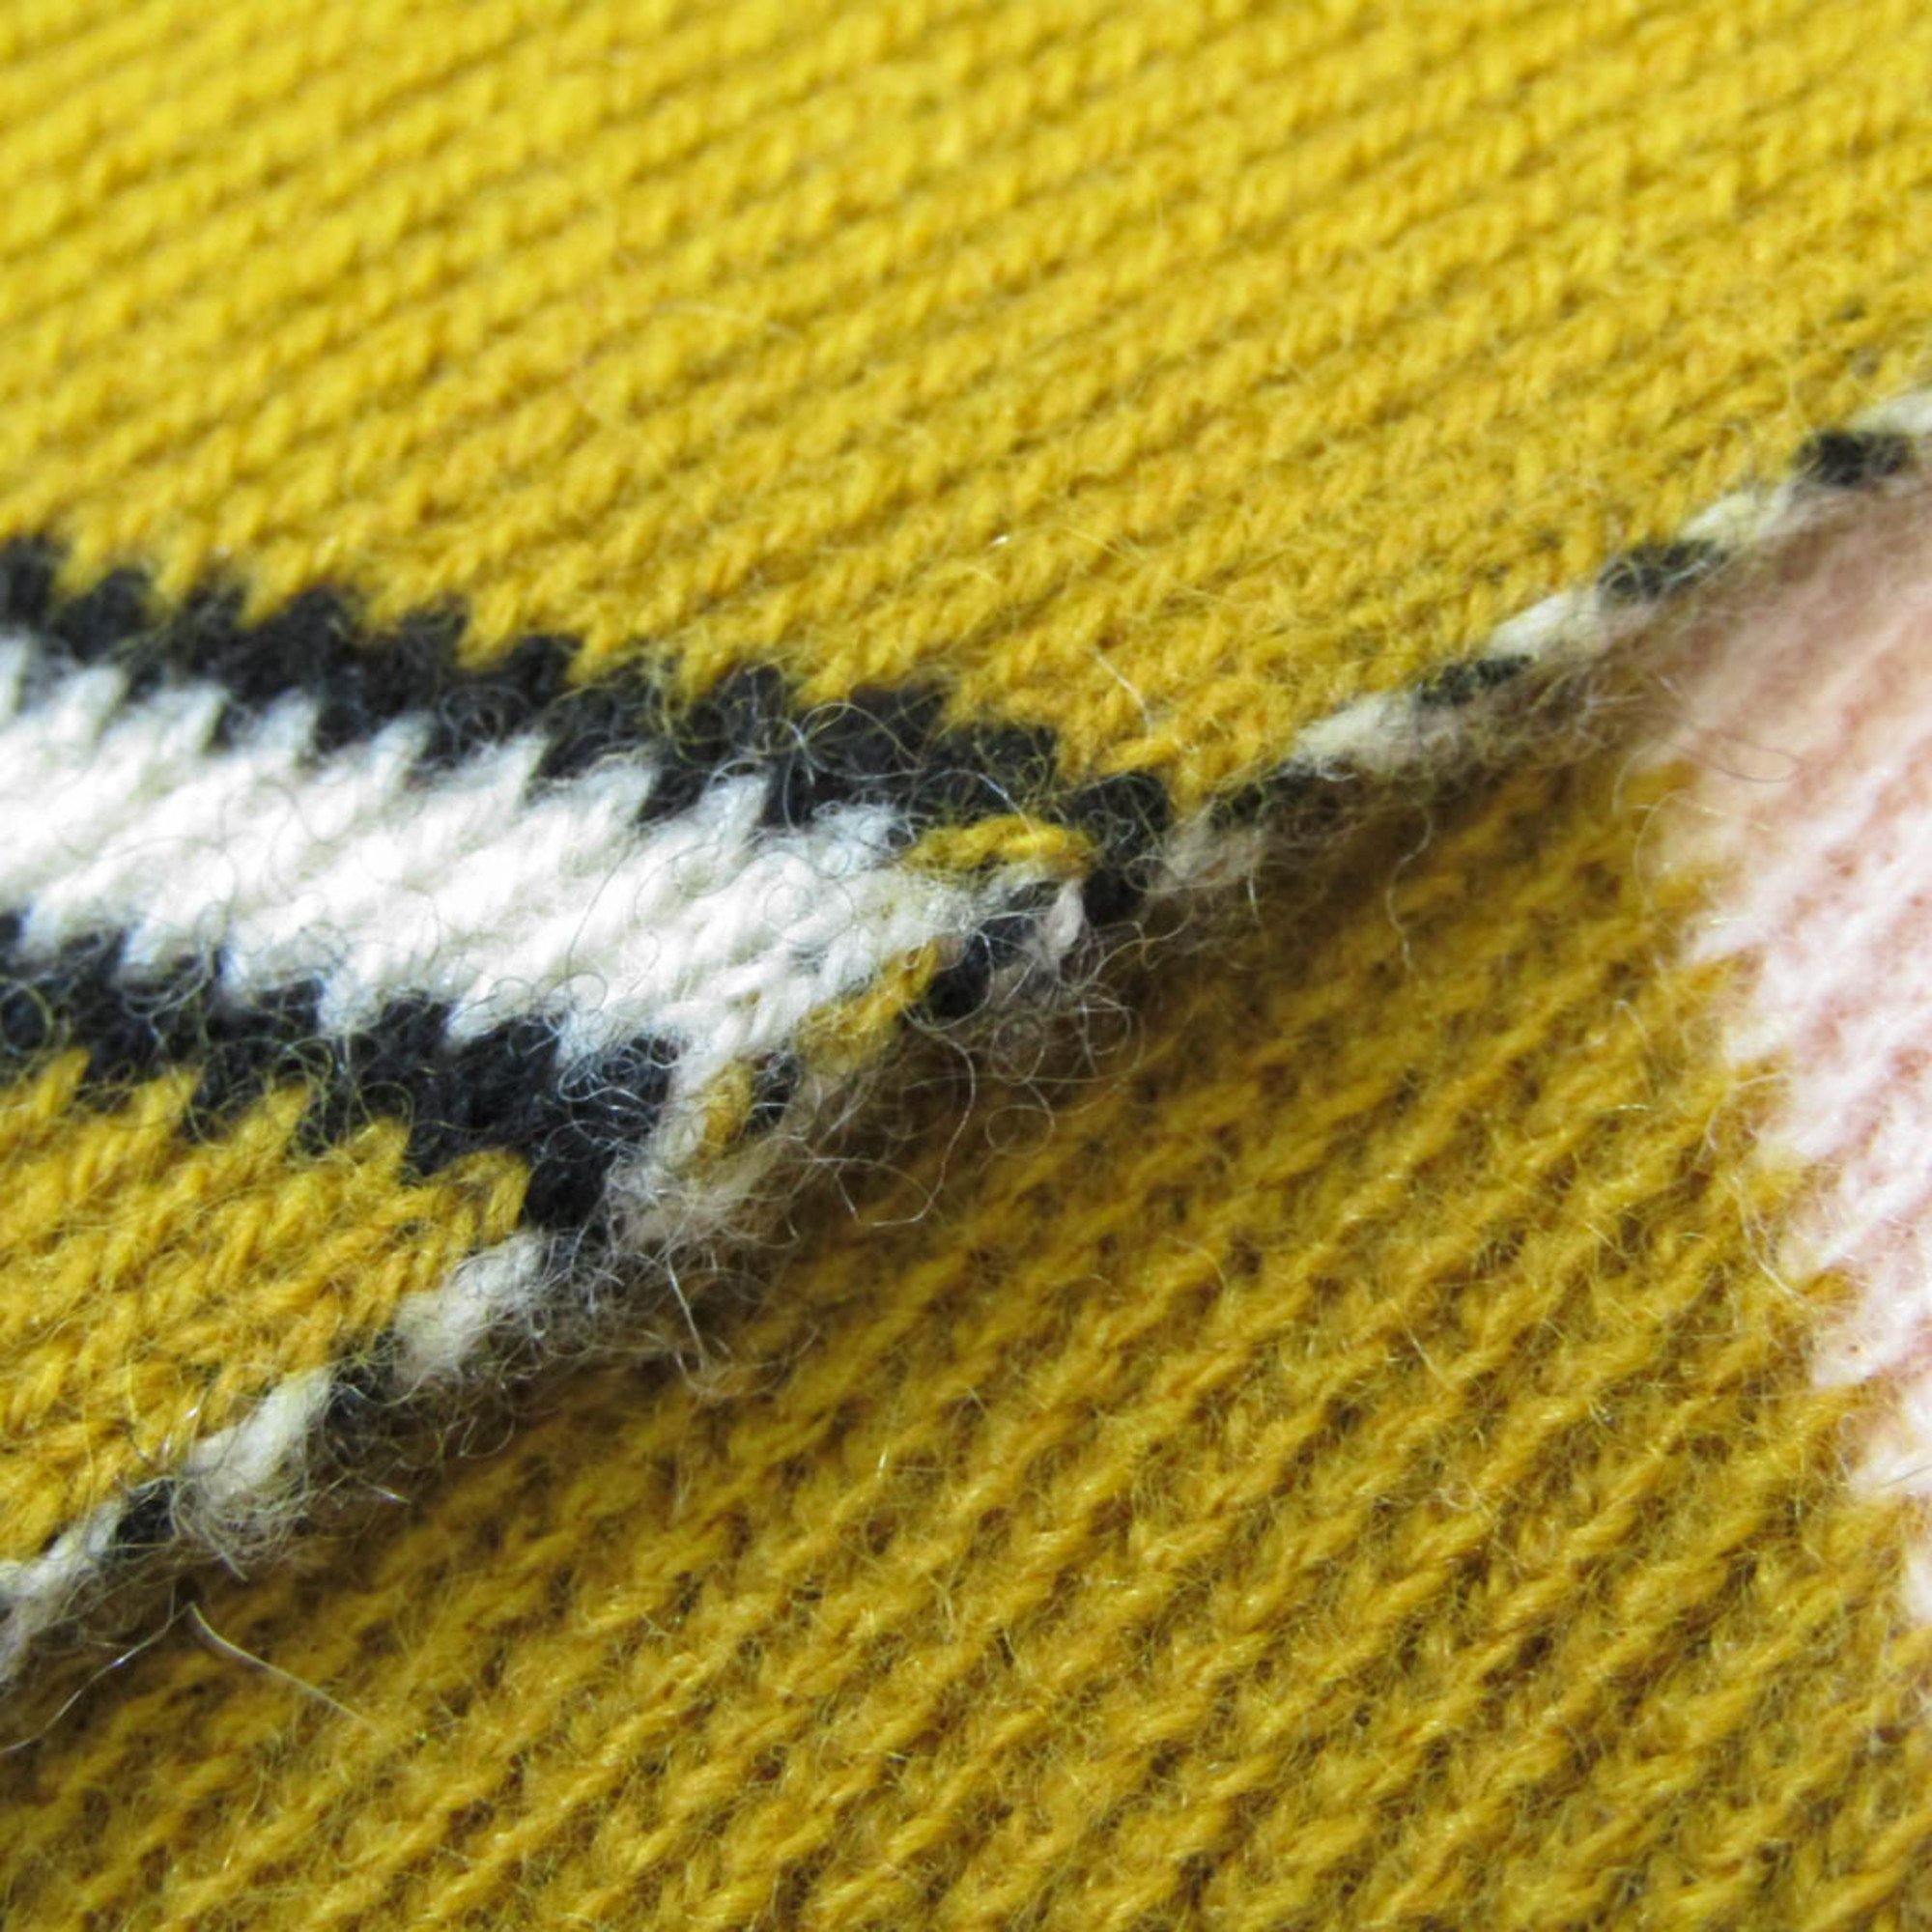 Burberry KNITTED STRIPE TIPPET Muffler 407535 Women's Wool Cashmere Stole Light Pink,Off-white,Mustard